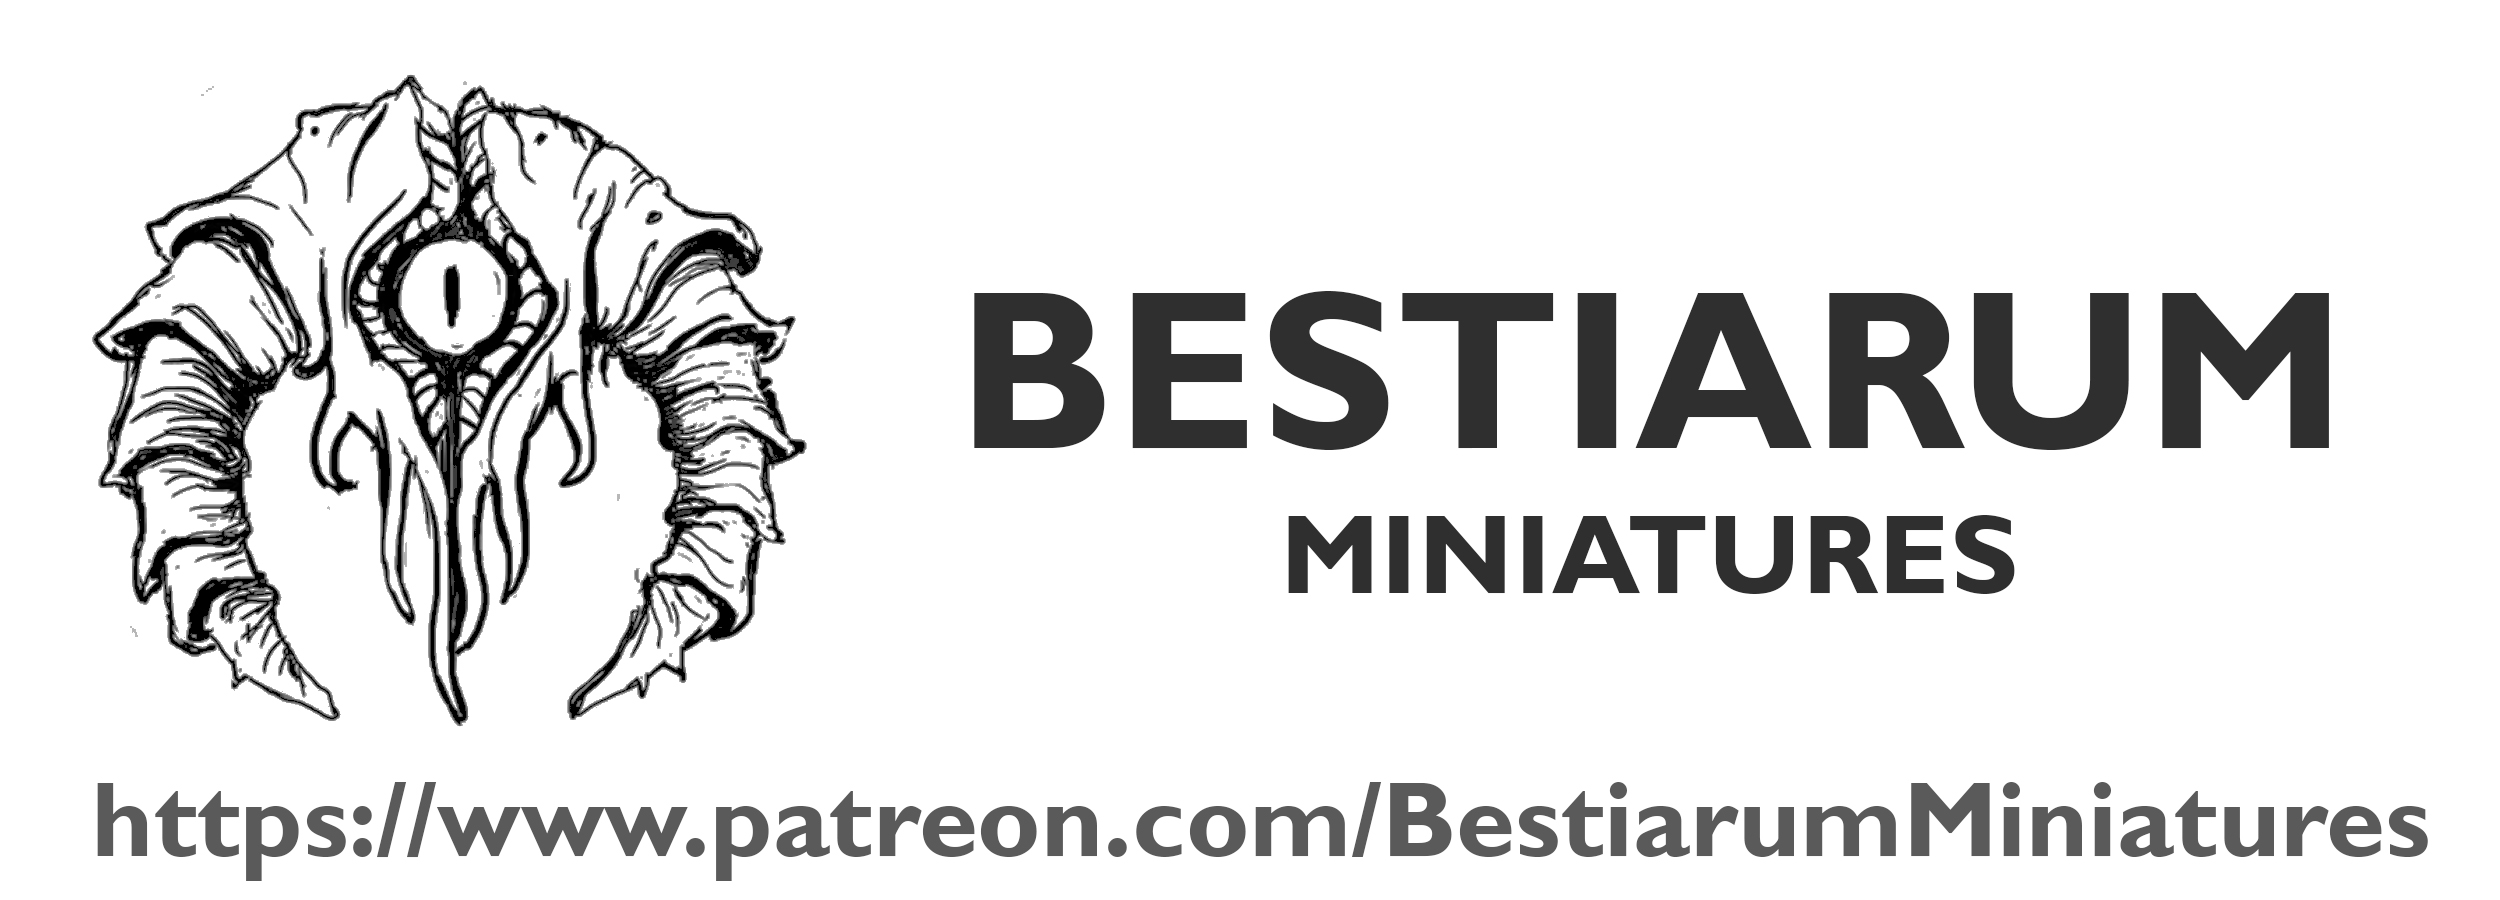 Bestiarum Miniatures